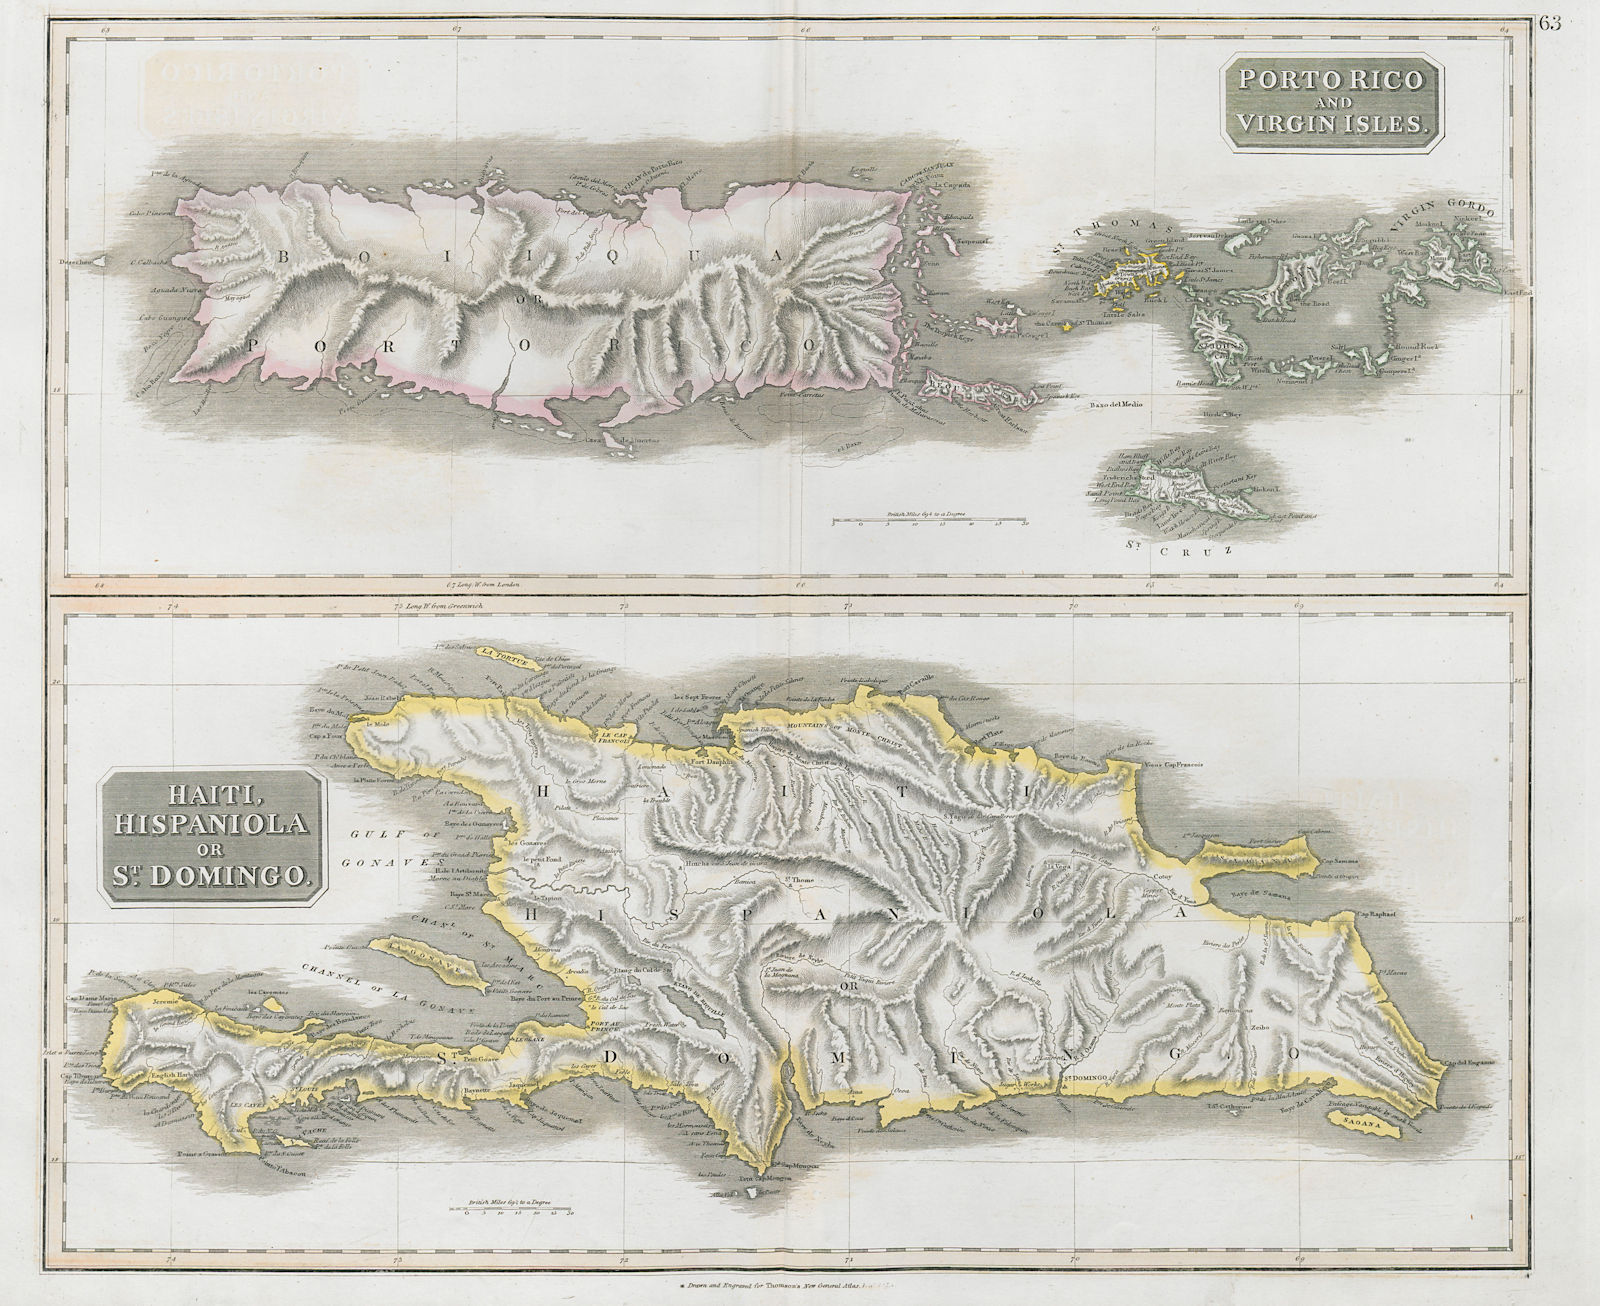 Puerto Rico & Virgin Islands. Haiti, Hispaniola or St. Domingo. THOMSON 1830 map